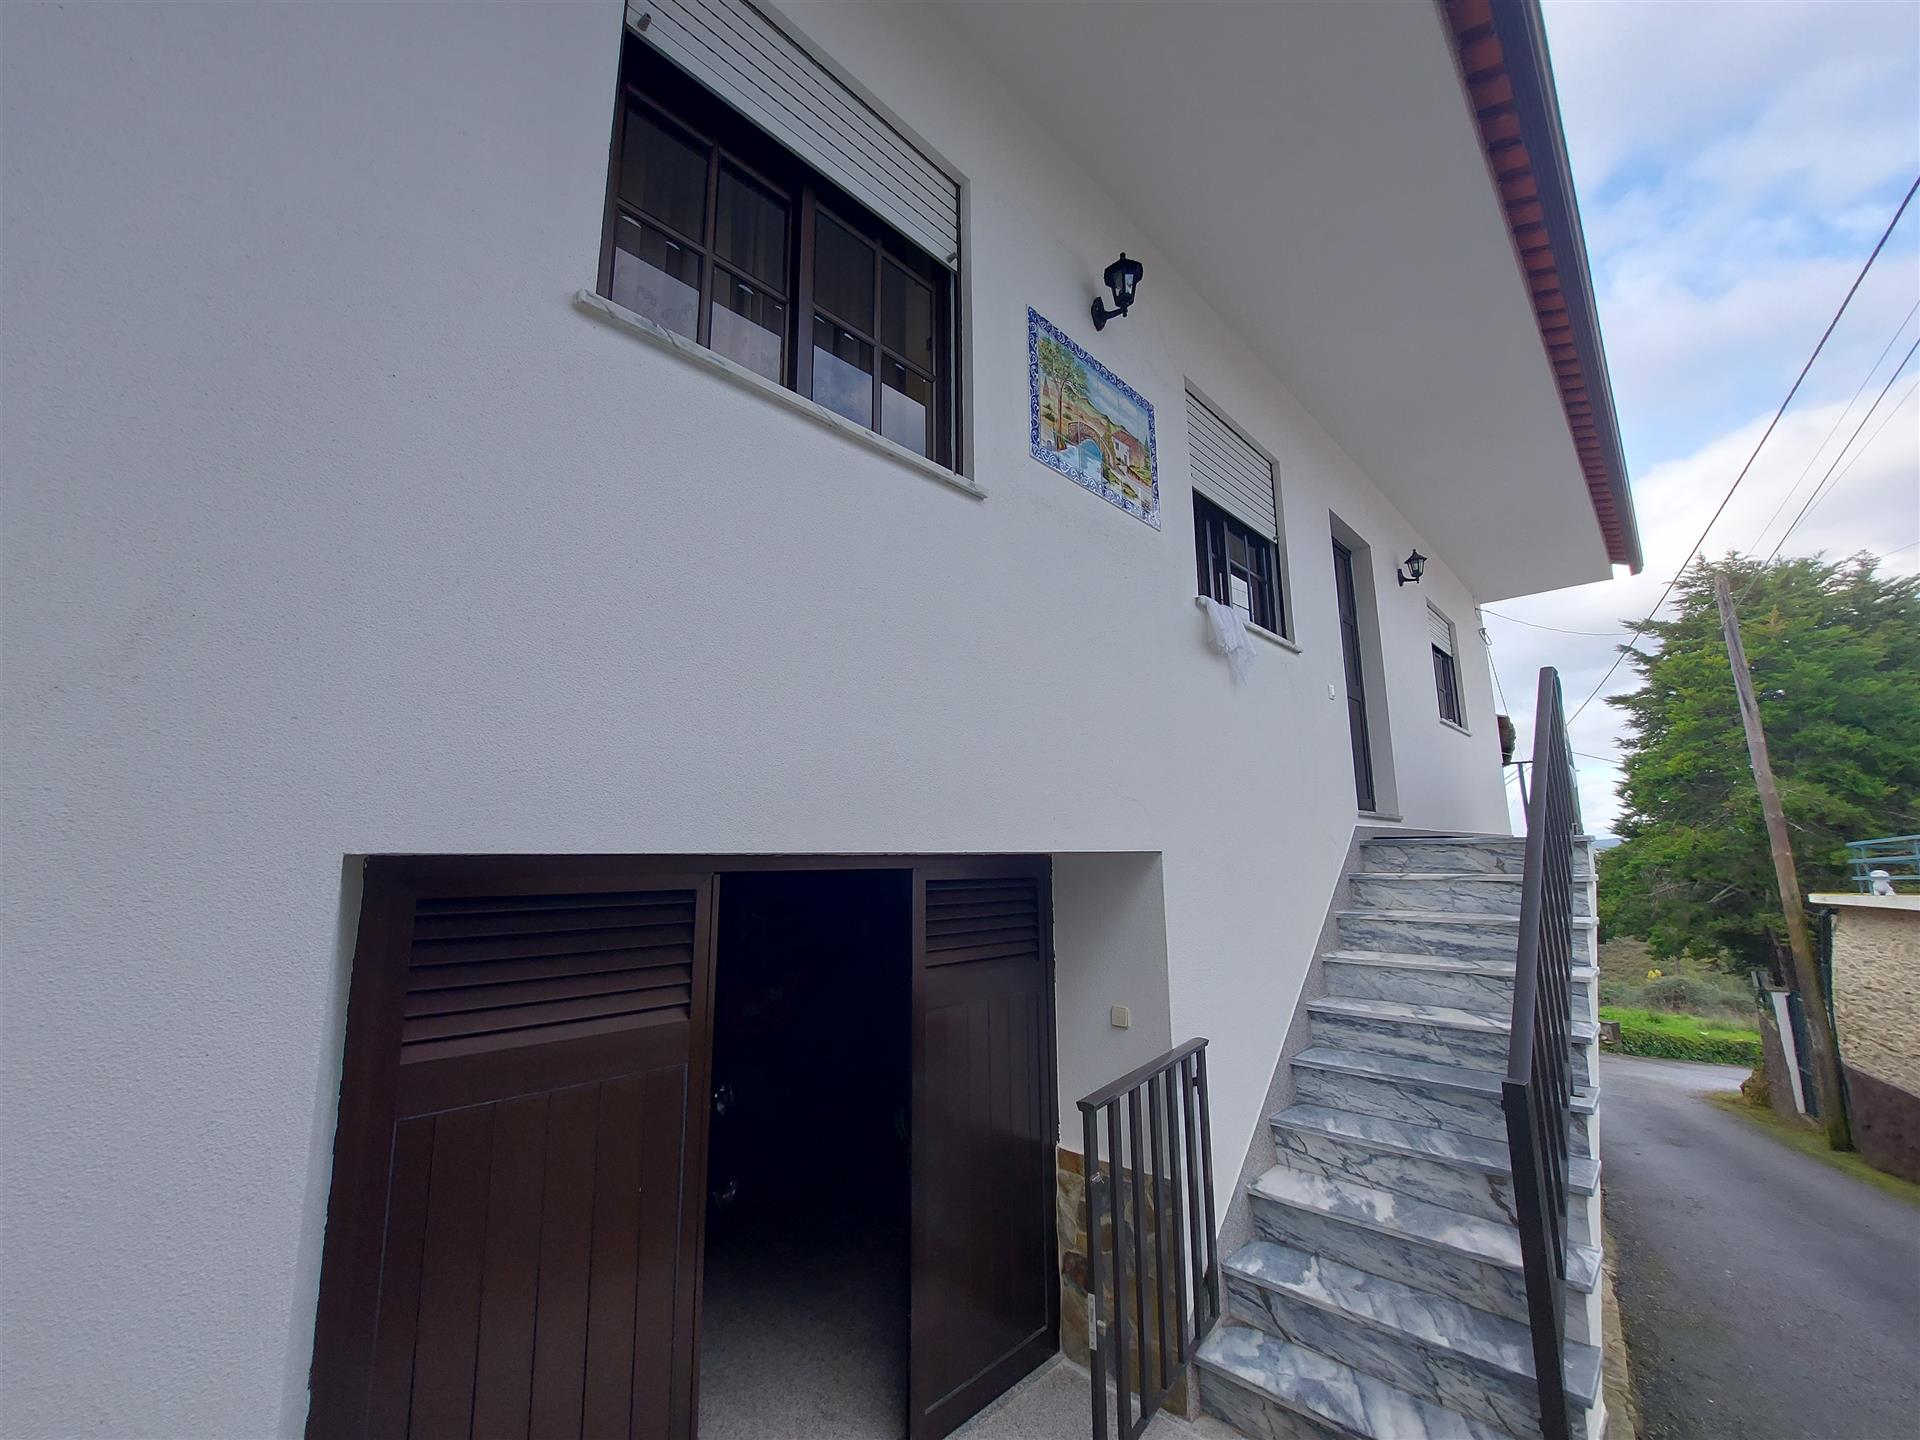 4 bedroom villa with garage and backyard in Côja Barril do Alva